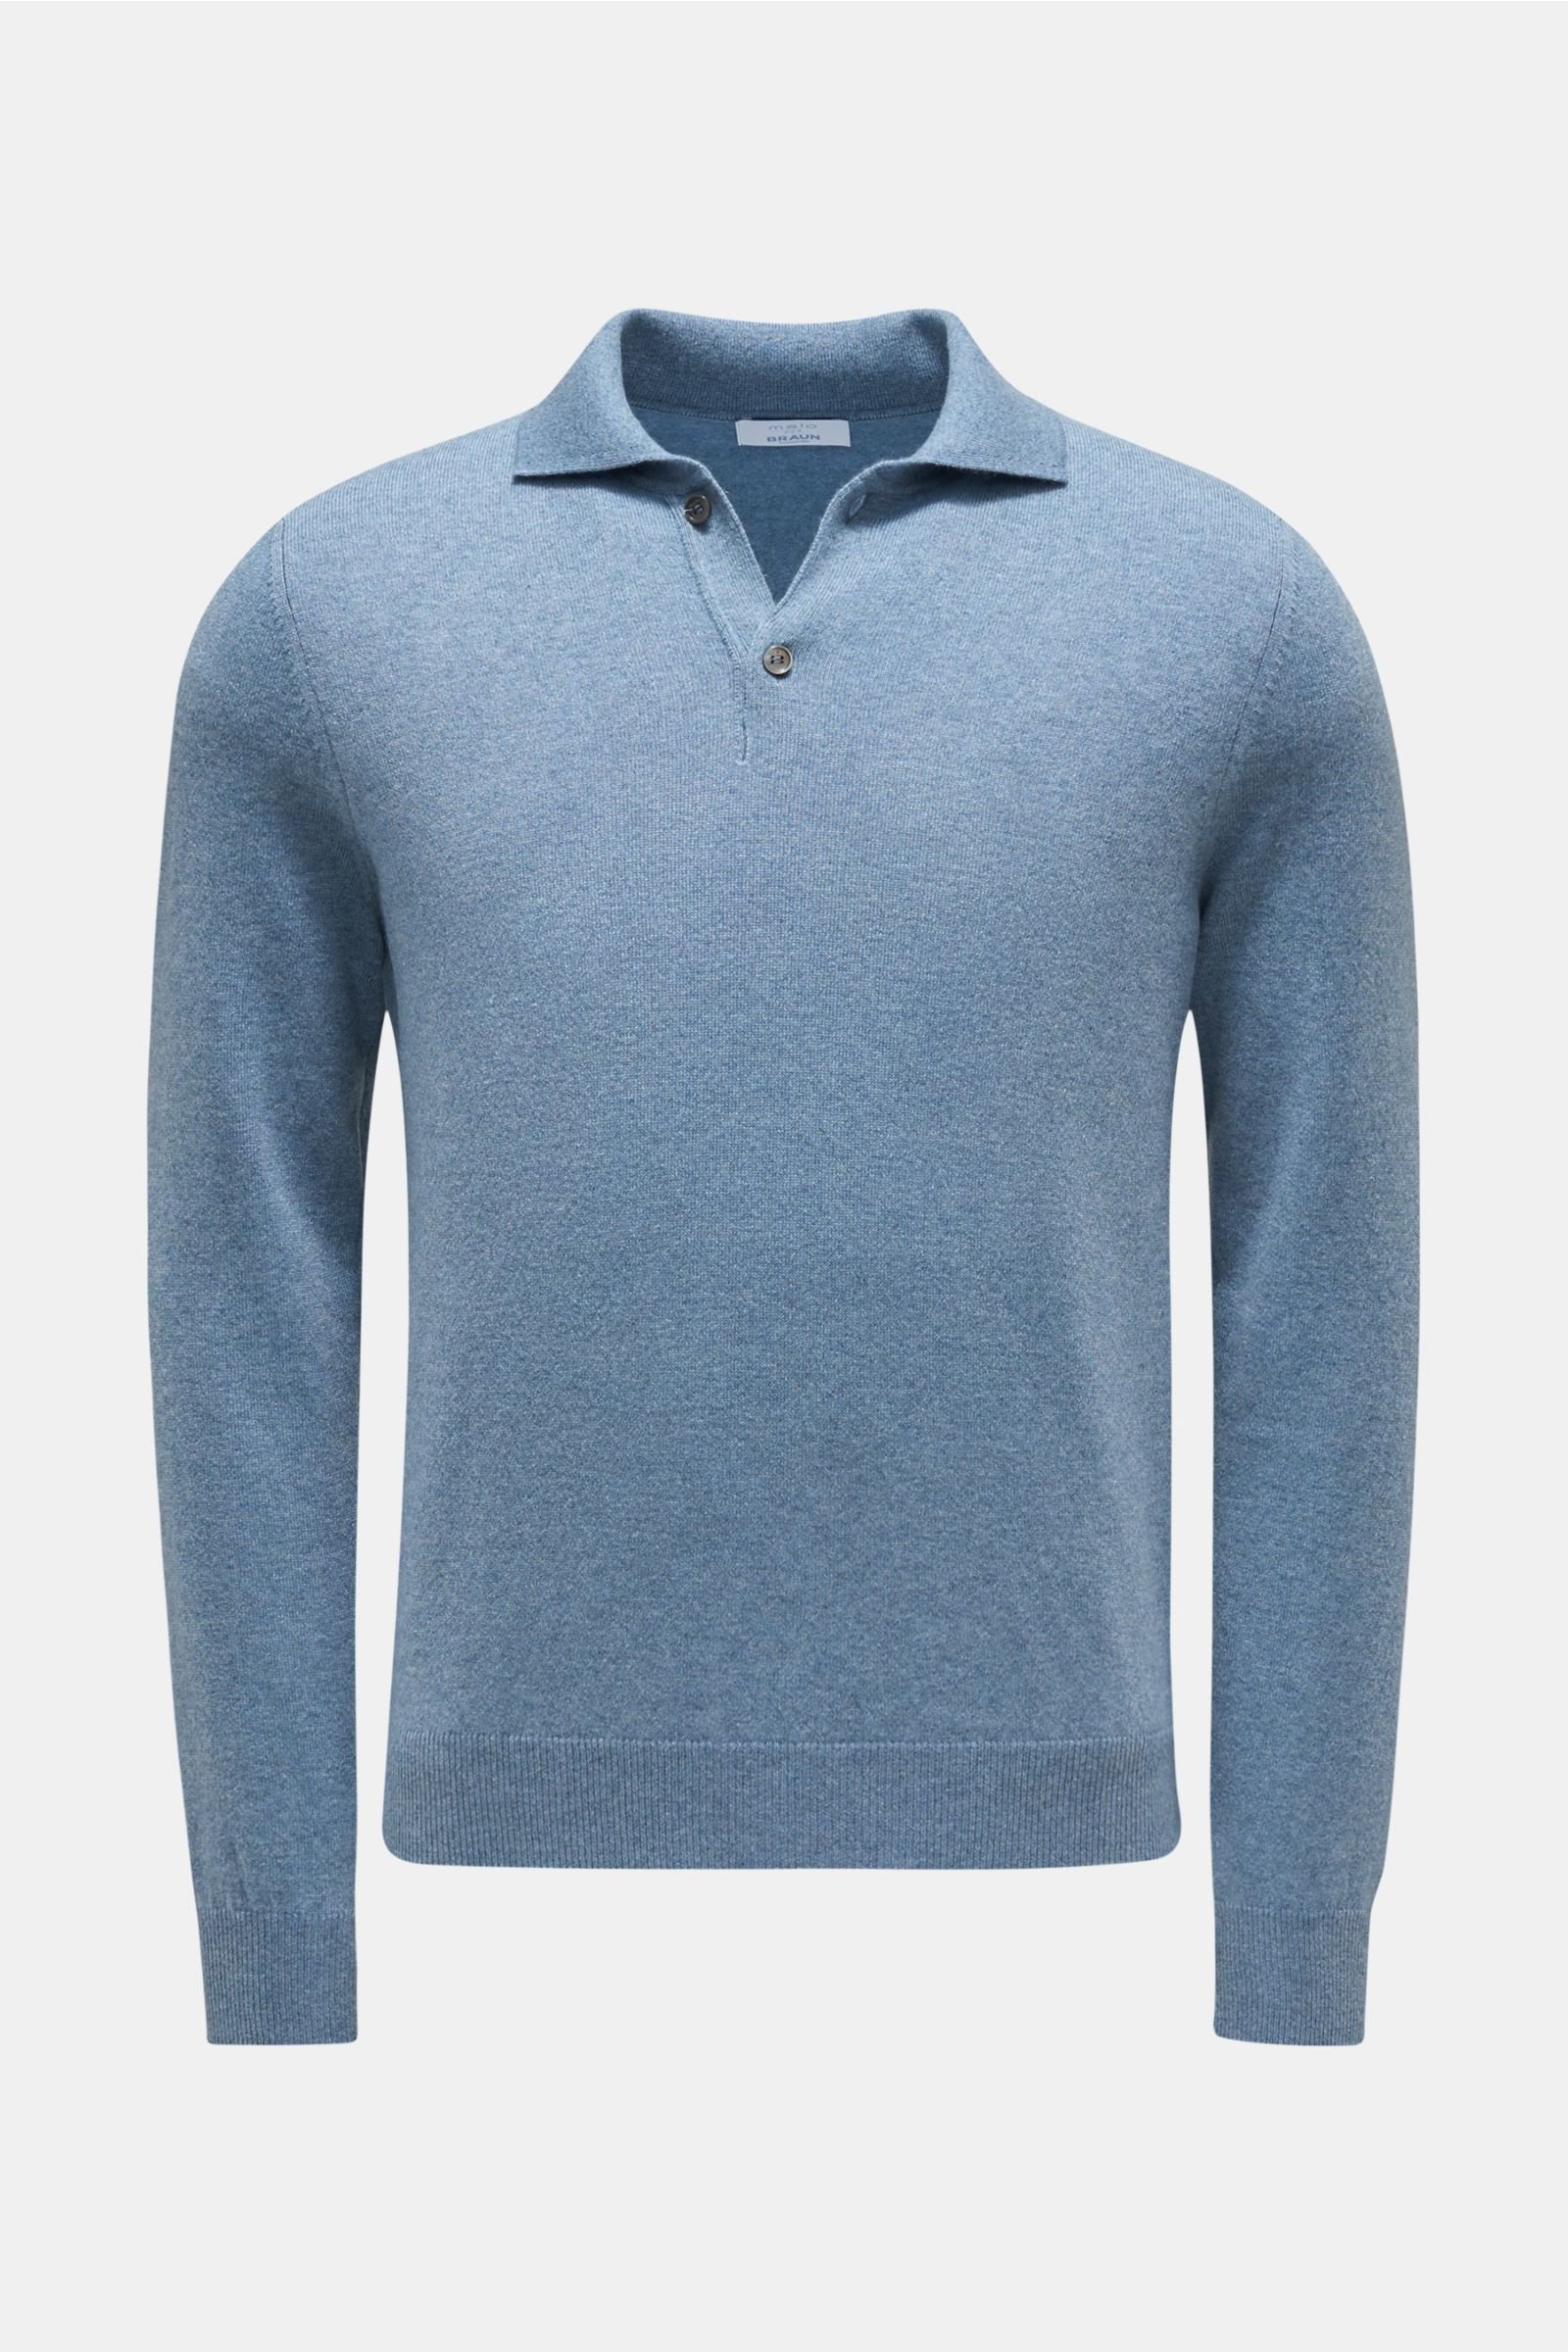 Cashmere knit polo grey-blue